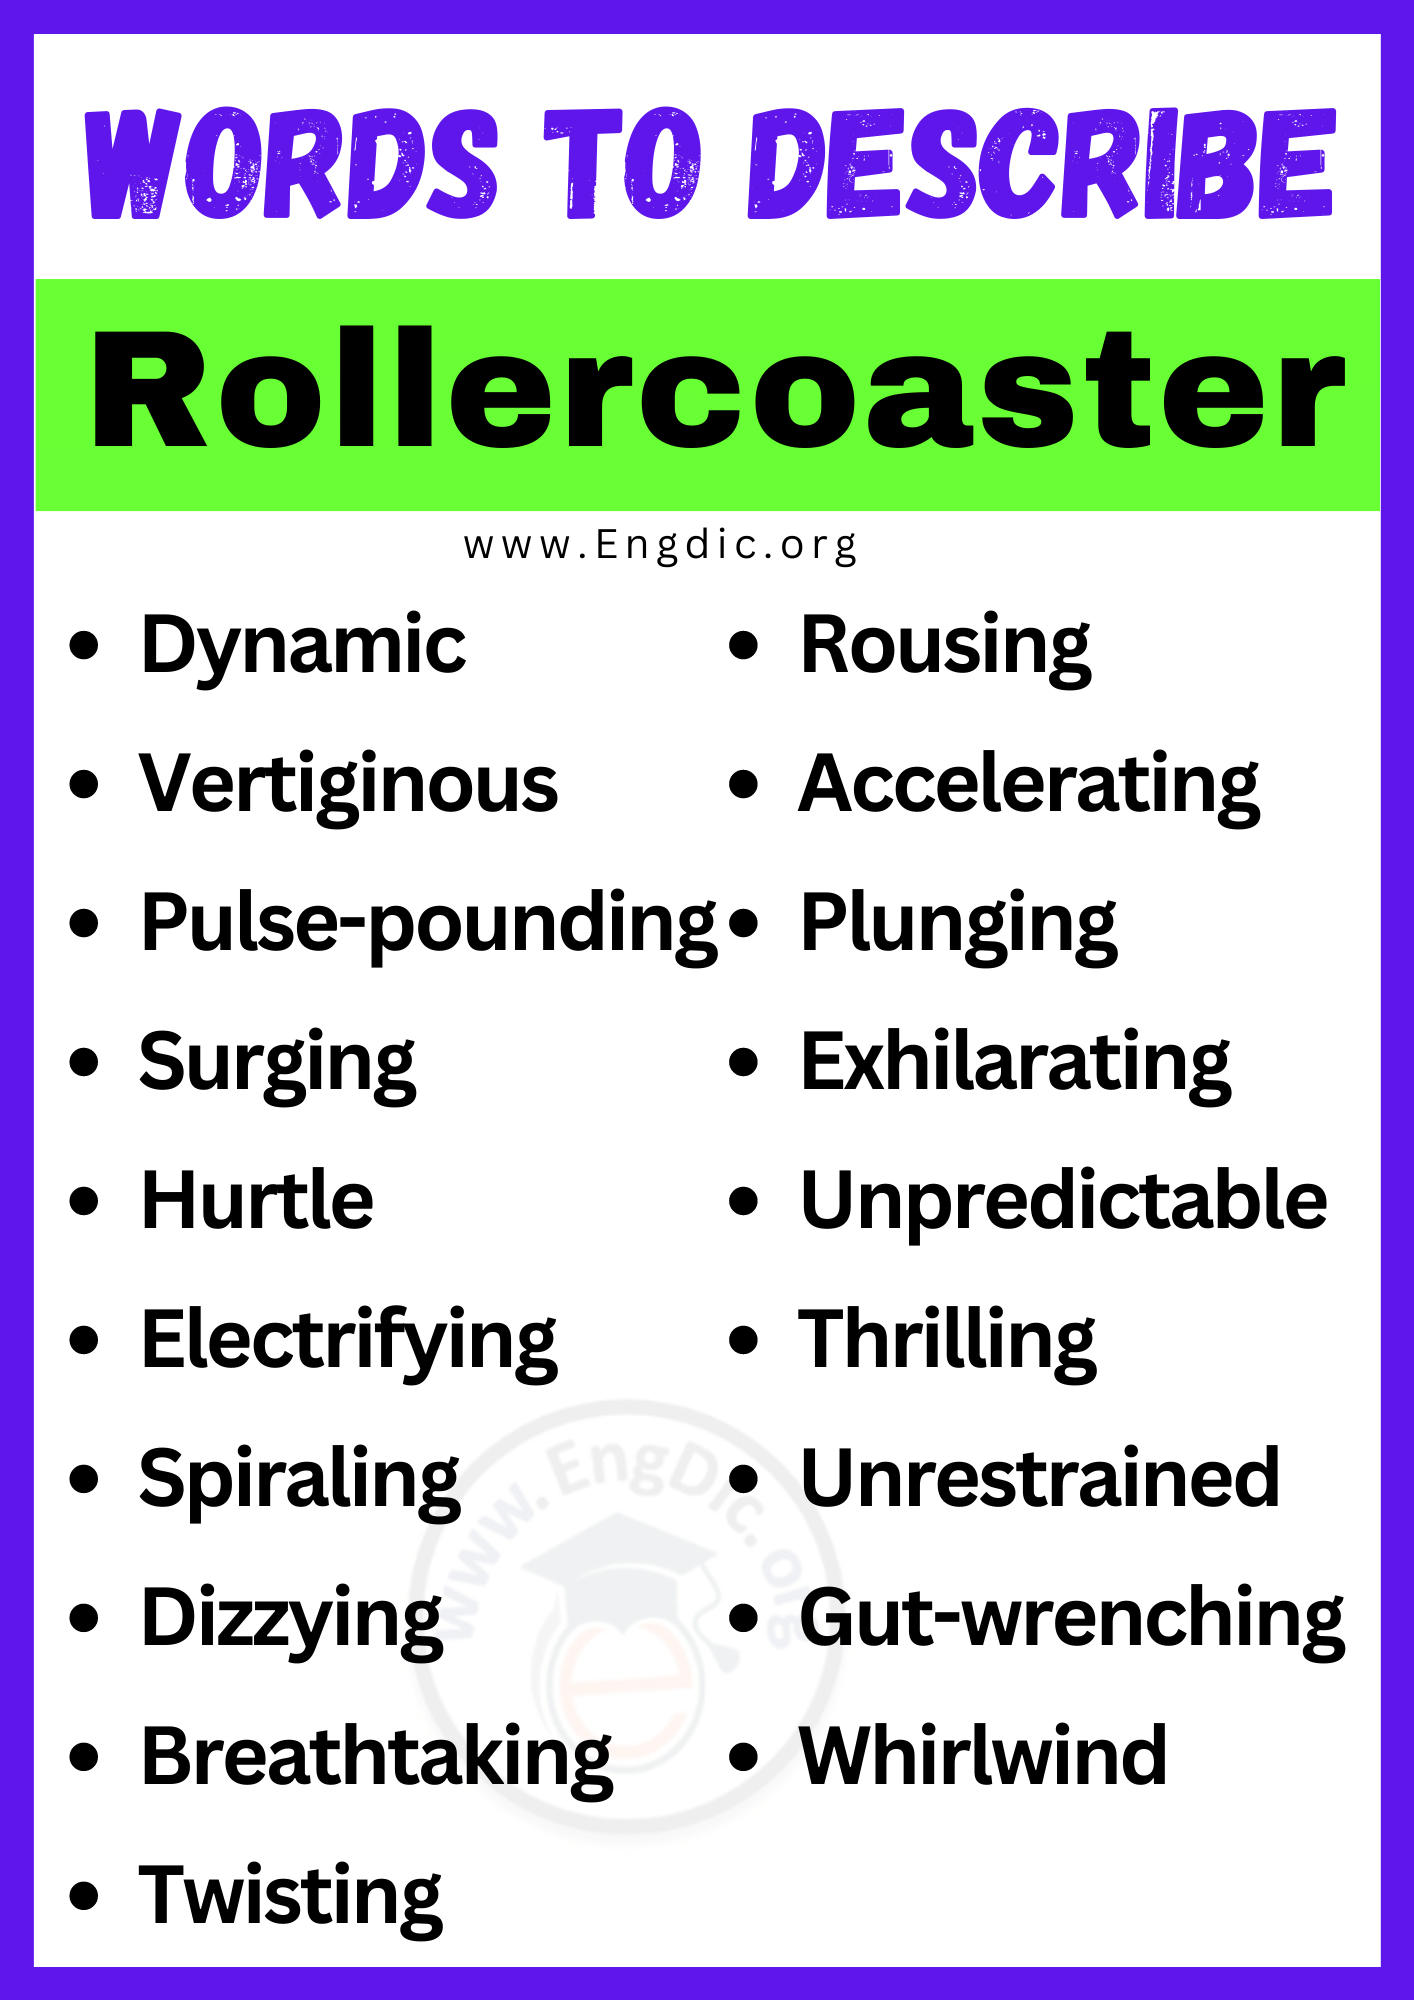 Words to Describe Rollercoaster